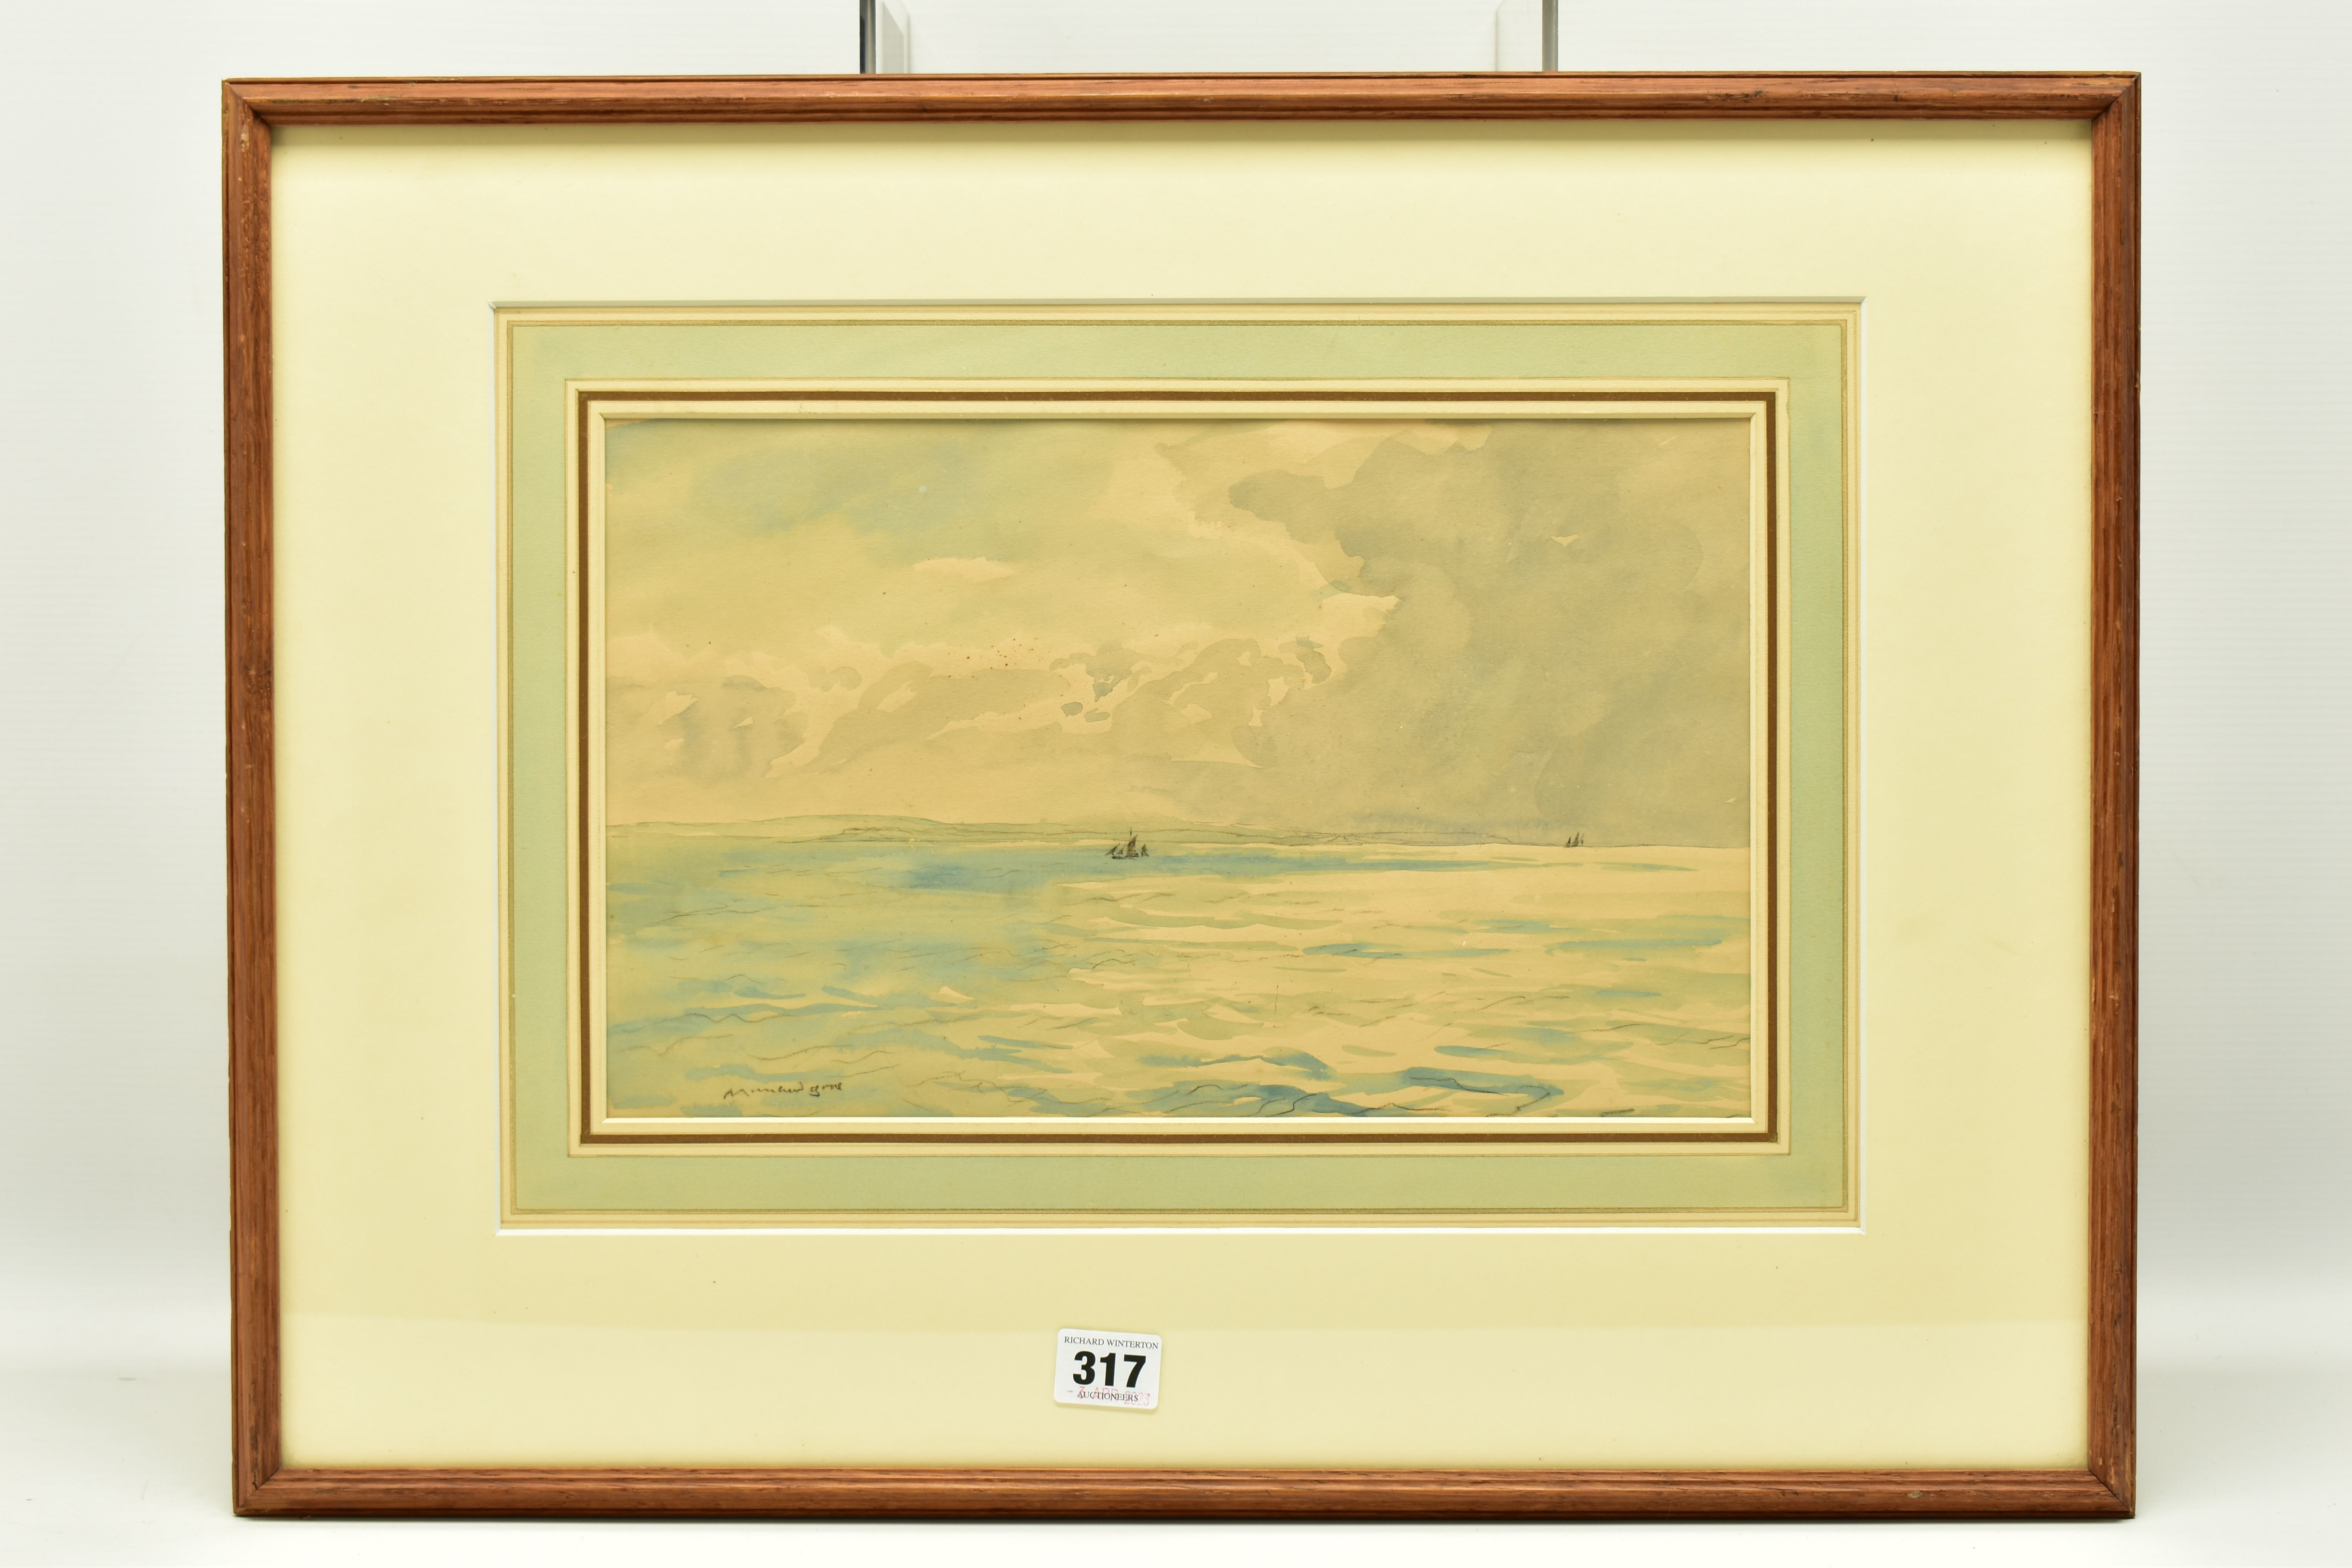 DAVID MUIRHEAD BONE (1876-1953) 'SPANISH COAST', a view to a distant coastline across open seas,